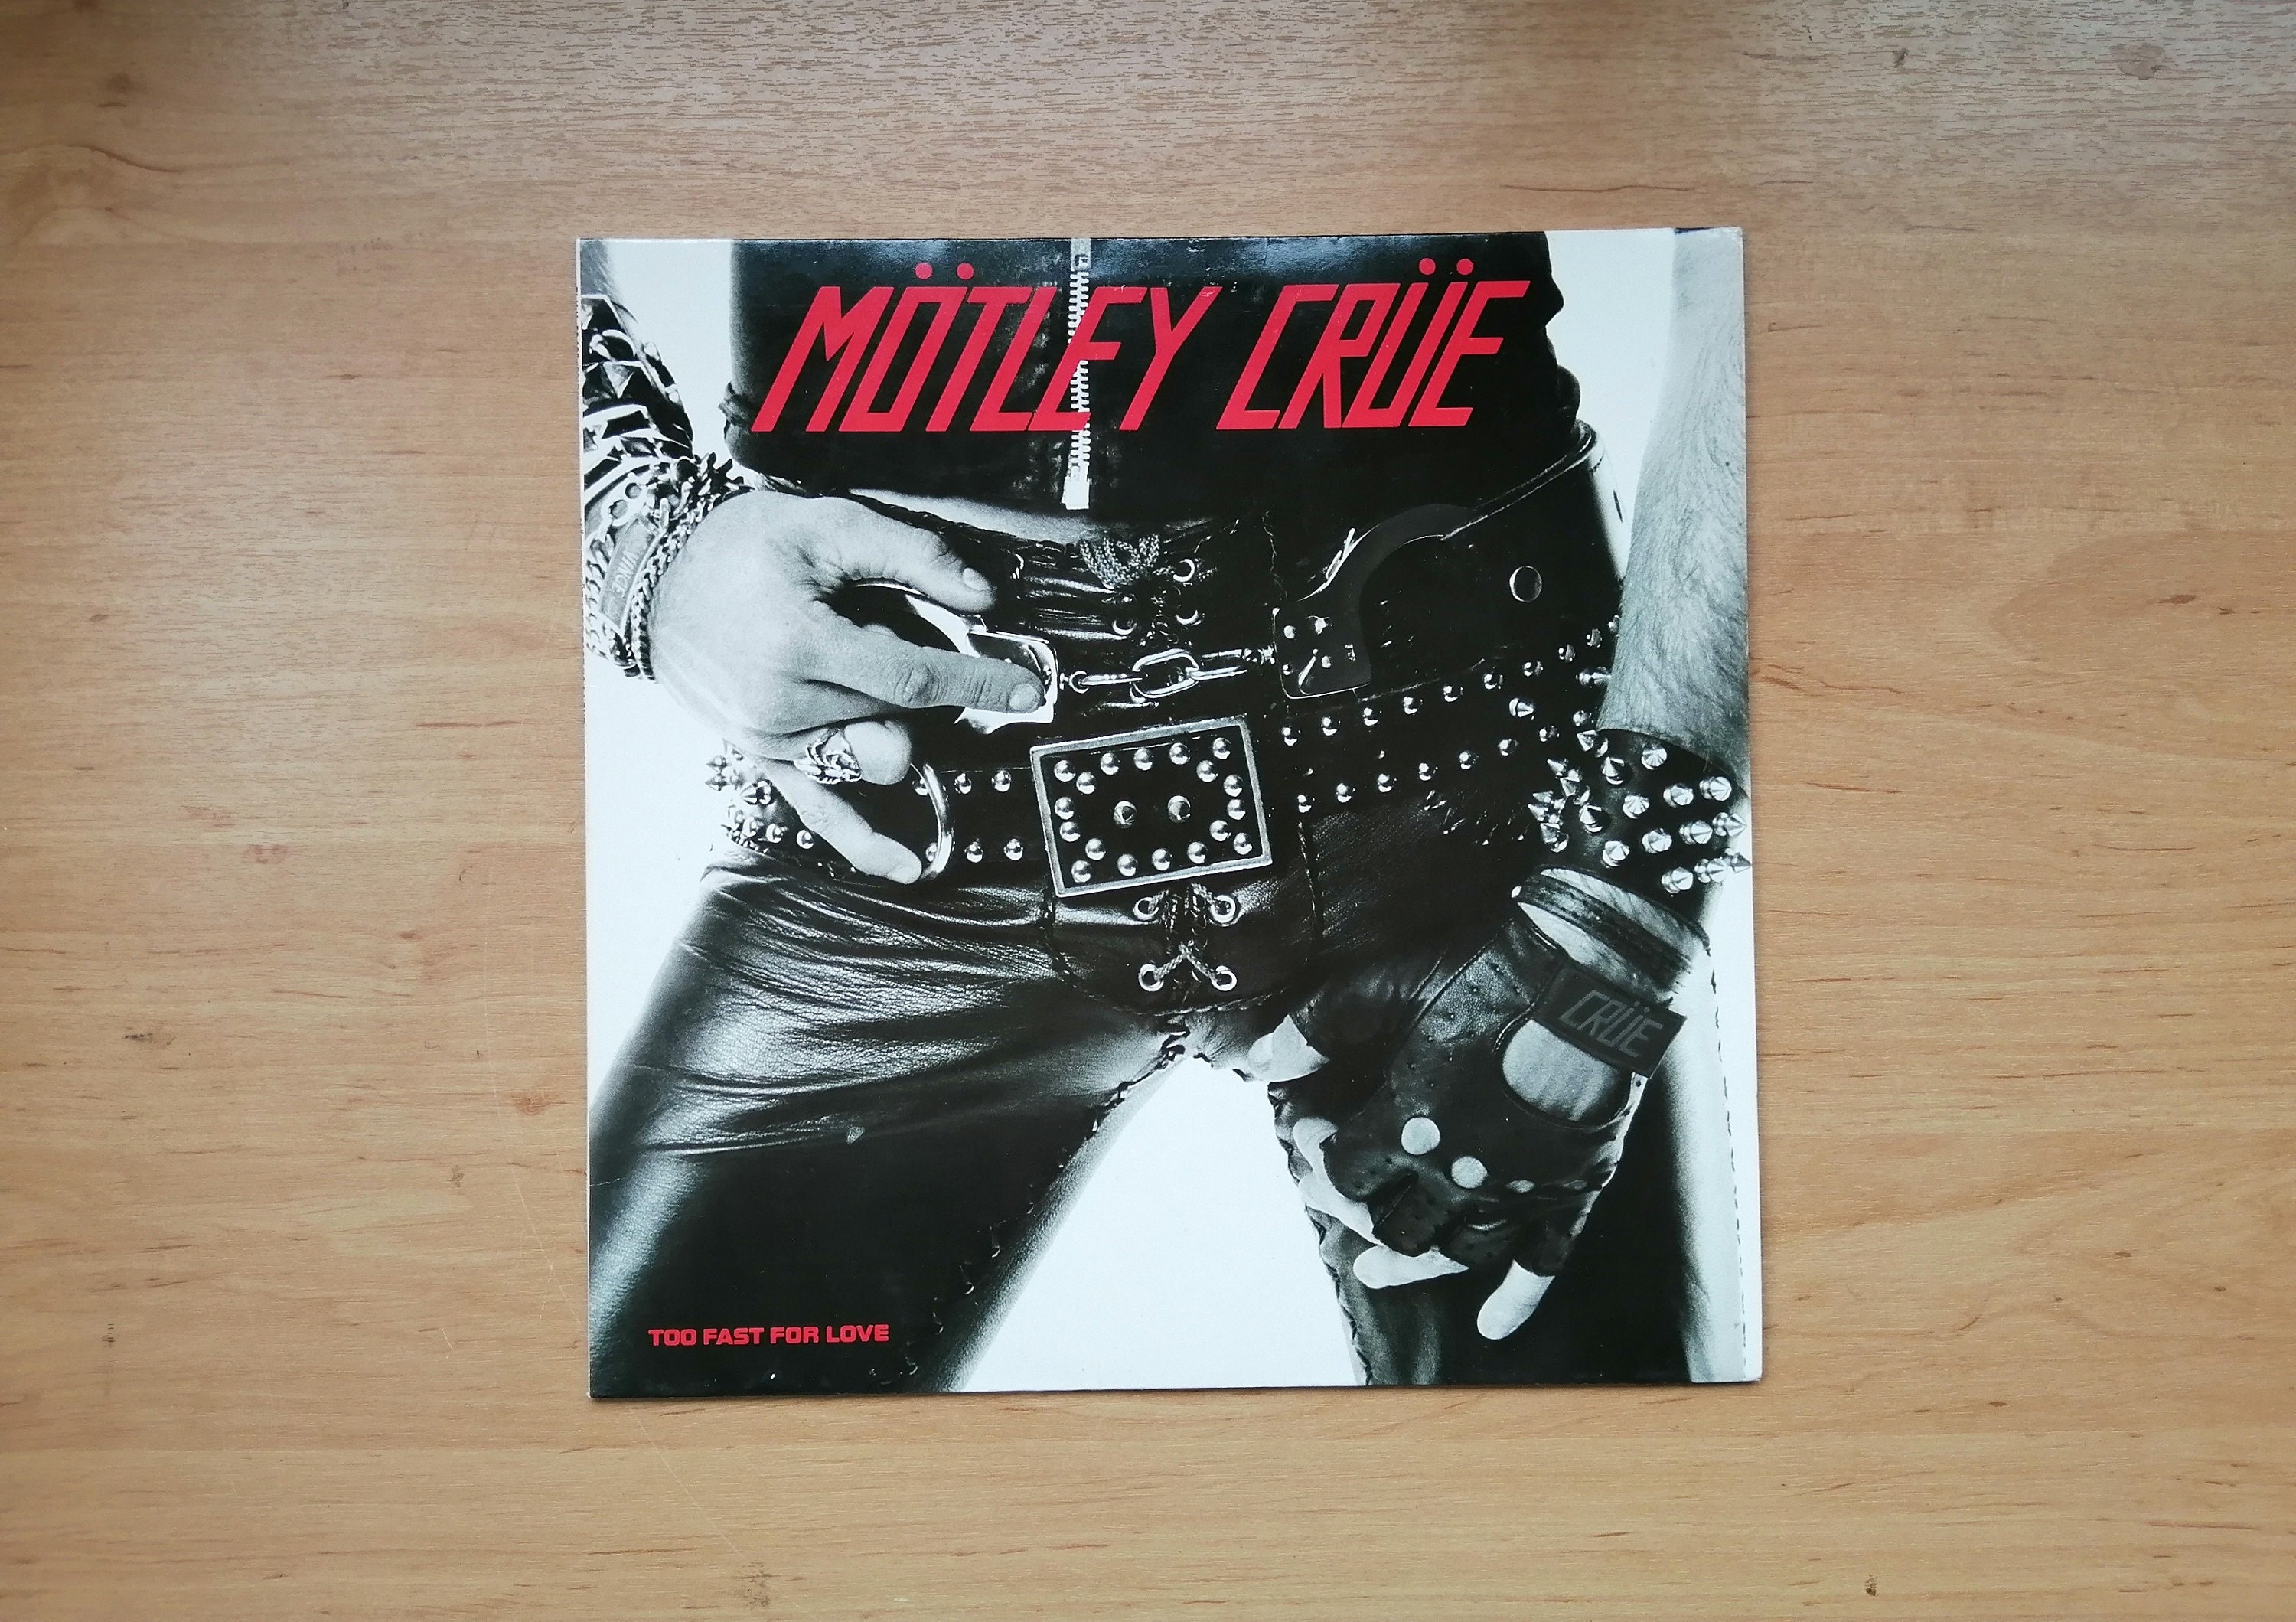 Motley crue vinyl for sale  